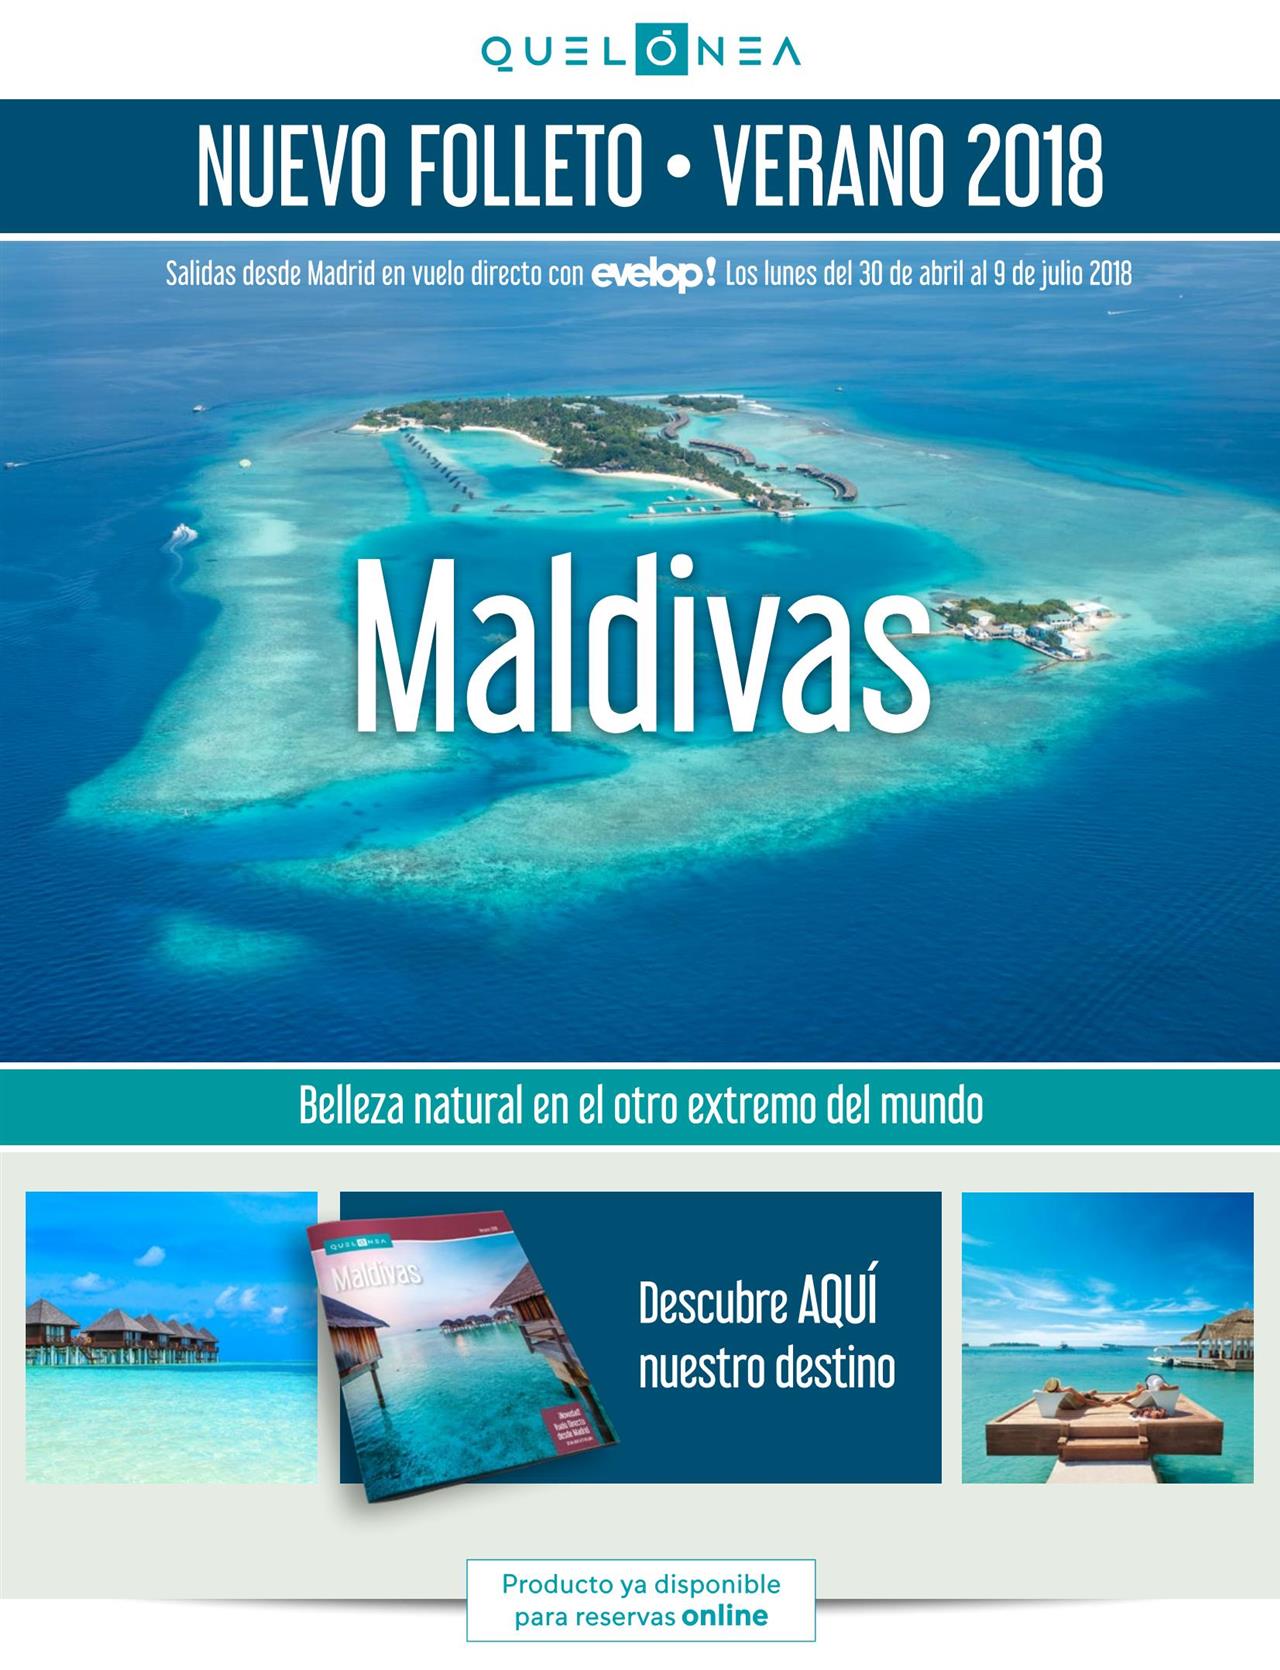 VETE A MALDIVAS CON SIMATRAVEL